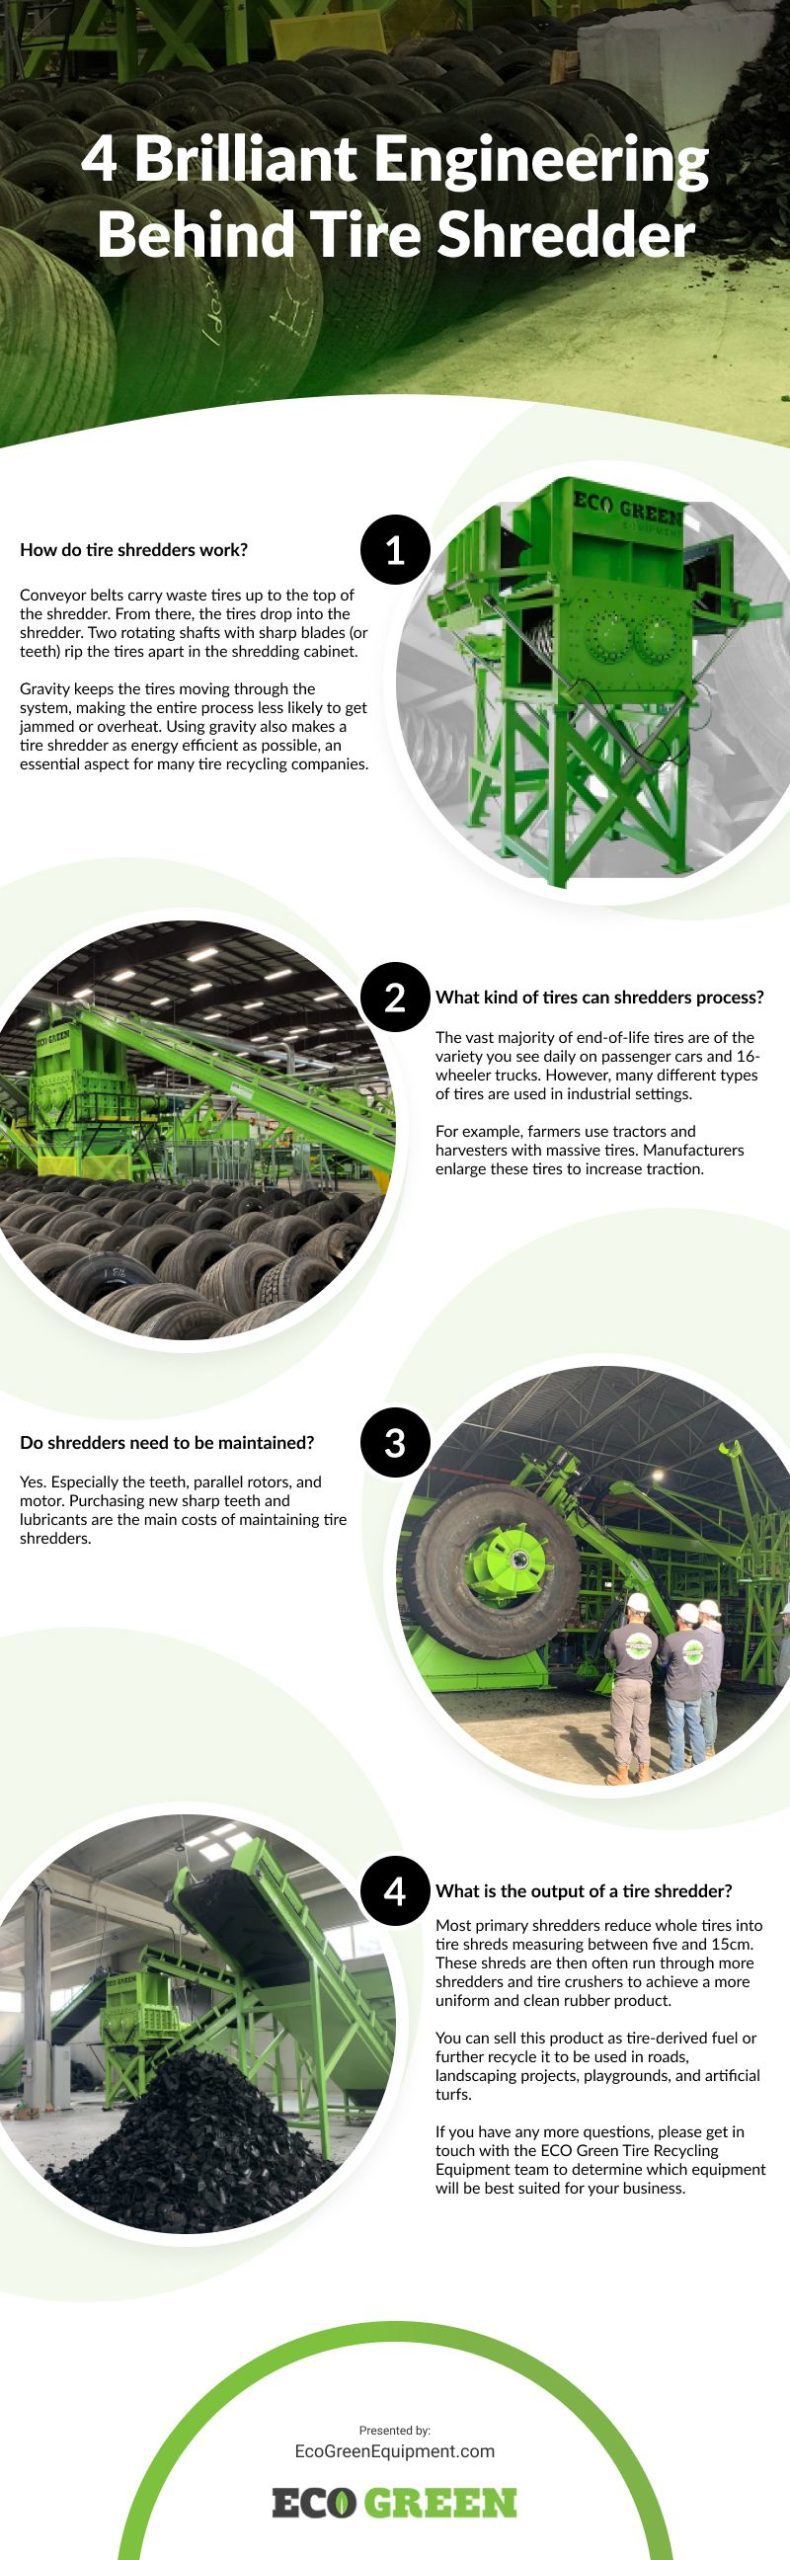 4 Brilliant Engineering Behind Tire Shredder Infographic